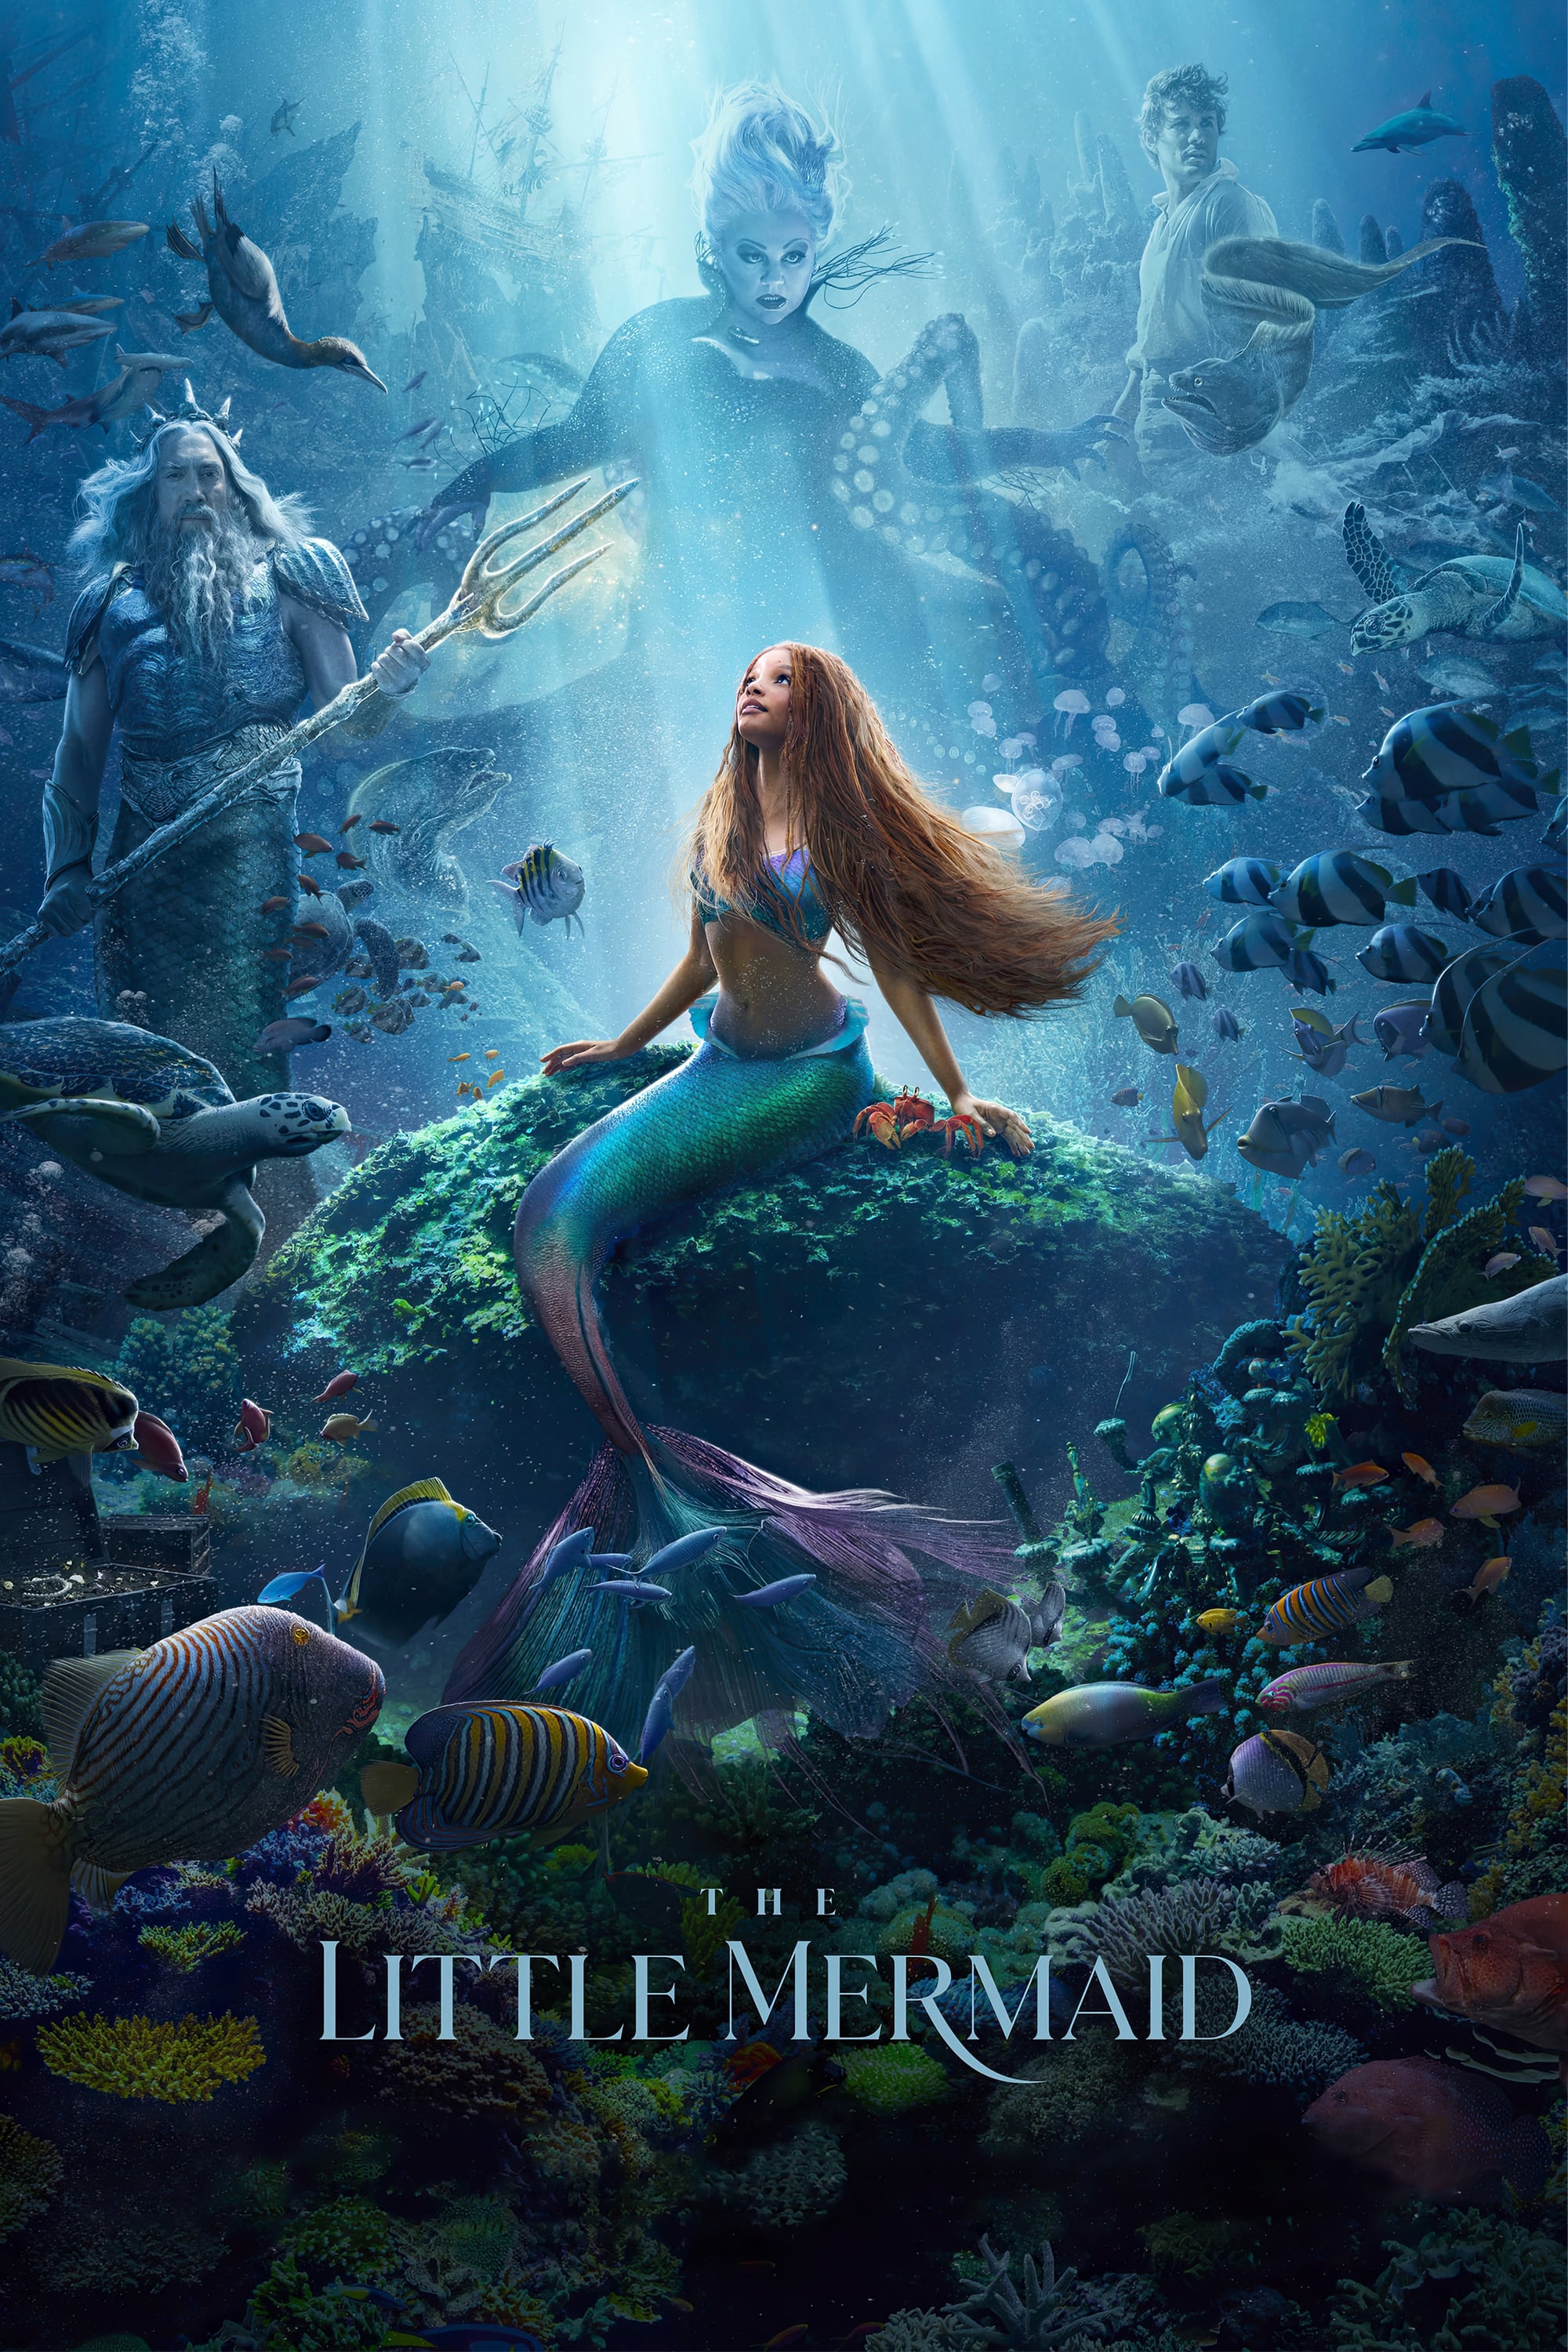 The Little Mermaid Cinema Release